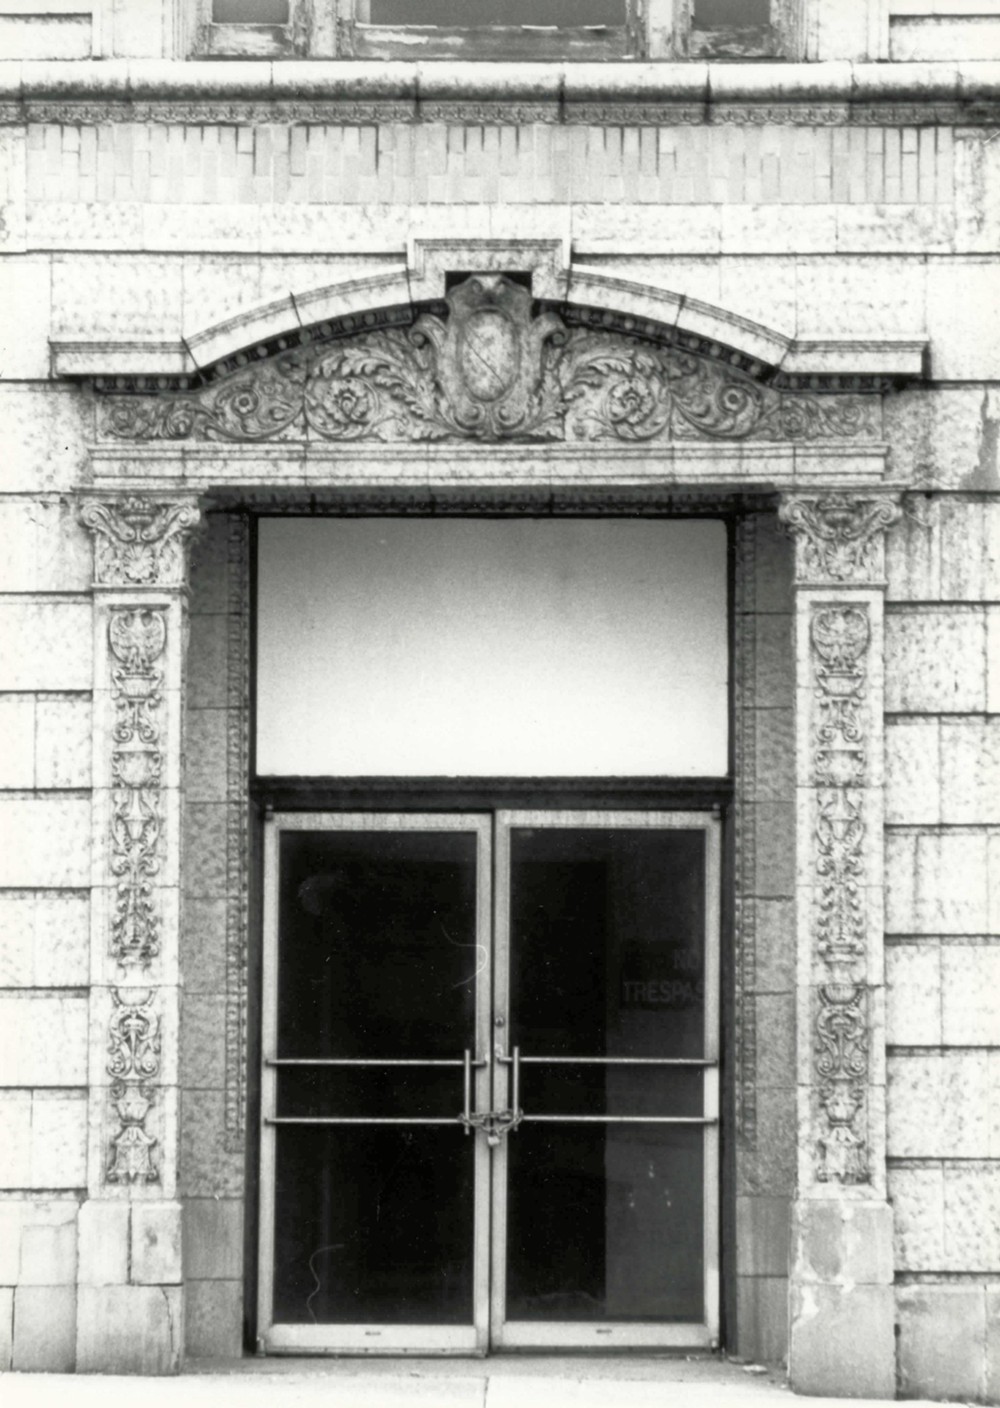 Hotel Waukegan - Chateau Waukegan, Waukegan Illinois Entrance on Sheridan Road (1994)